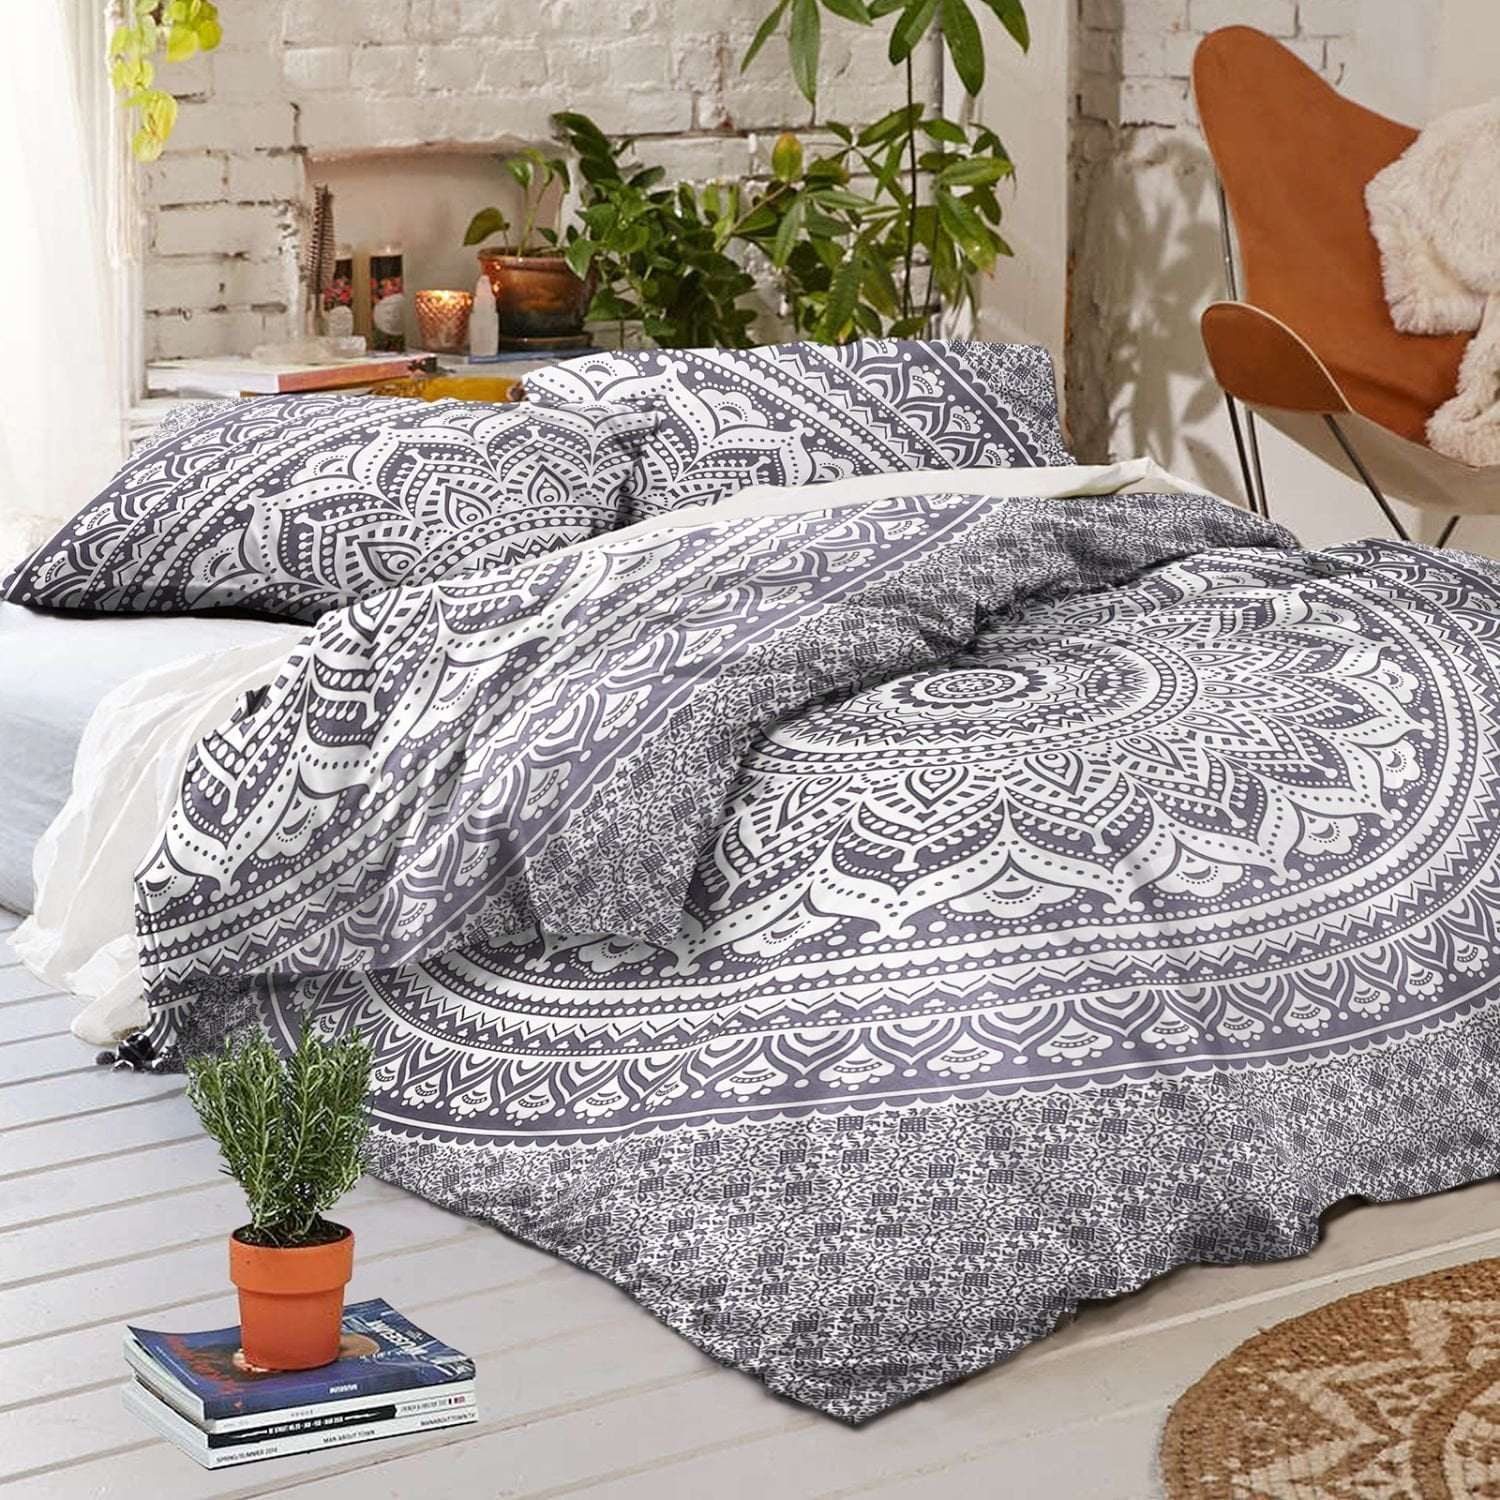 Indian Mandala Bedding Set Hippie Bohemian Bed Sheet Queen Size Tapestry Throw 